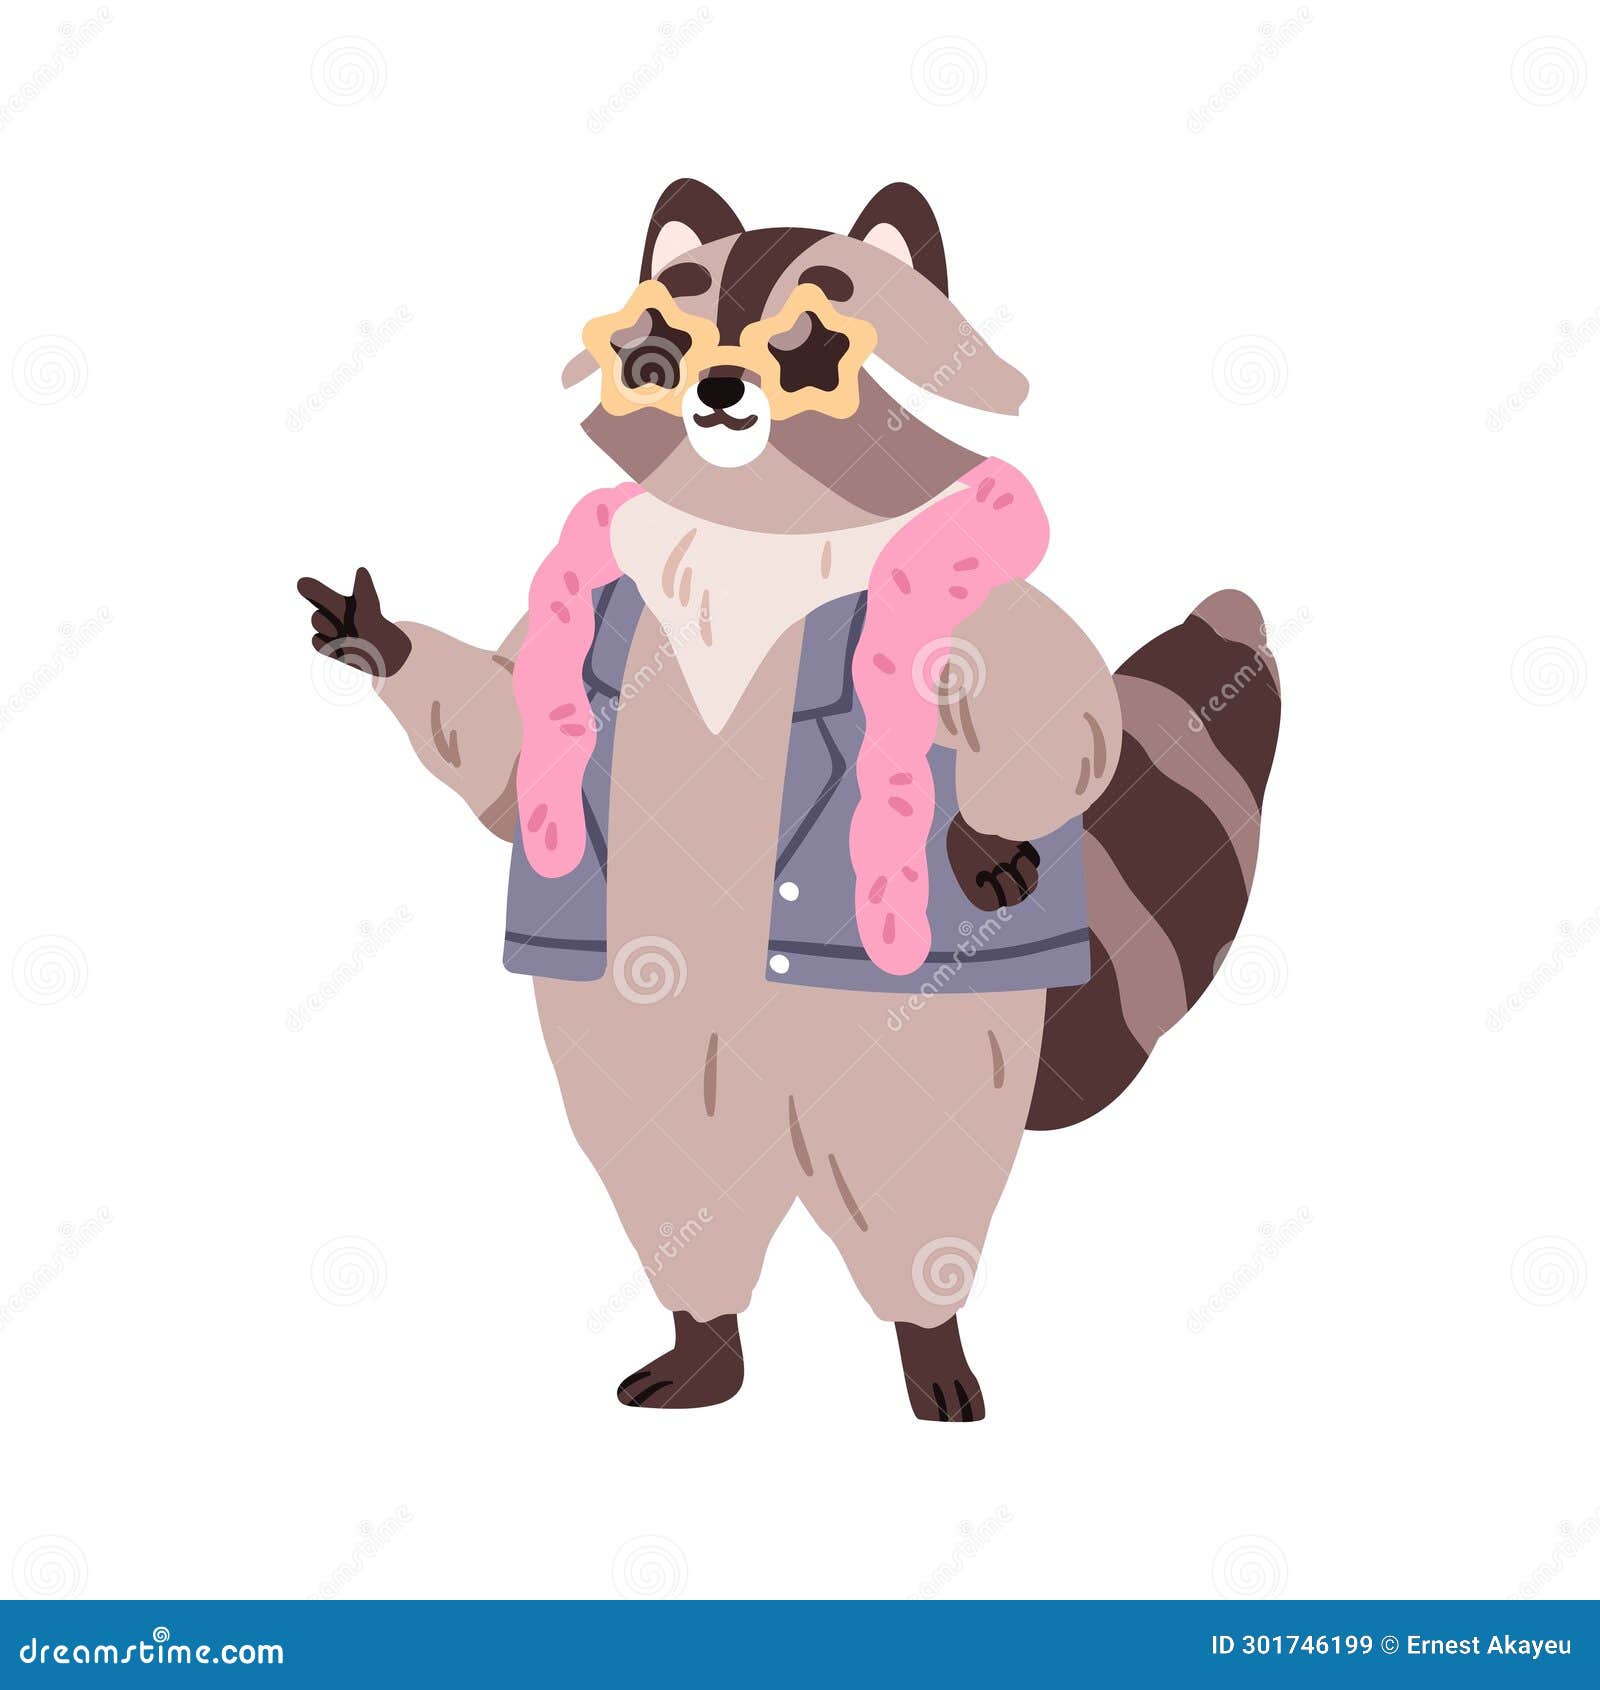 cute funny cool raccoon in sunglasses. comic fashion sassy animal character in star sunglasses. cheeky funky mammal